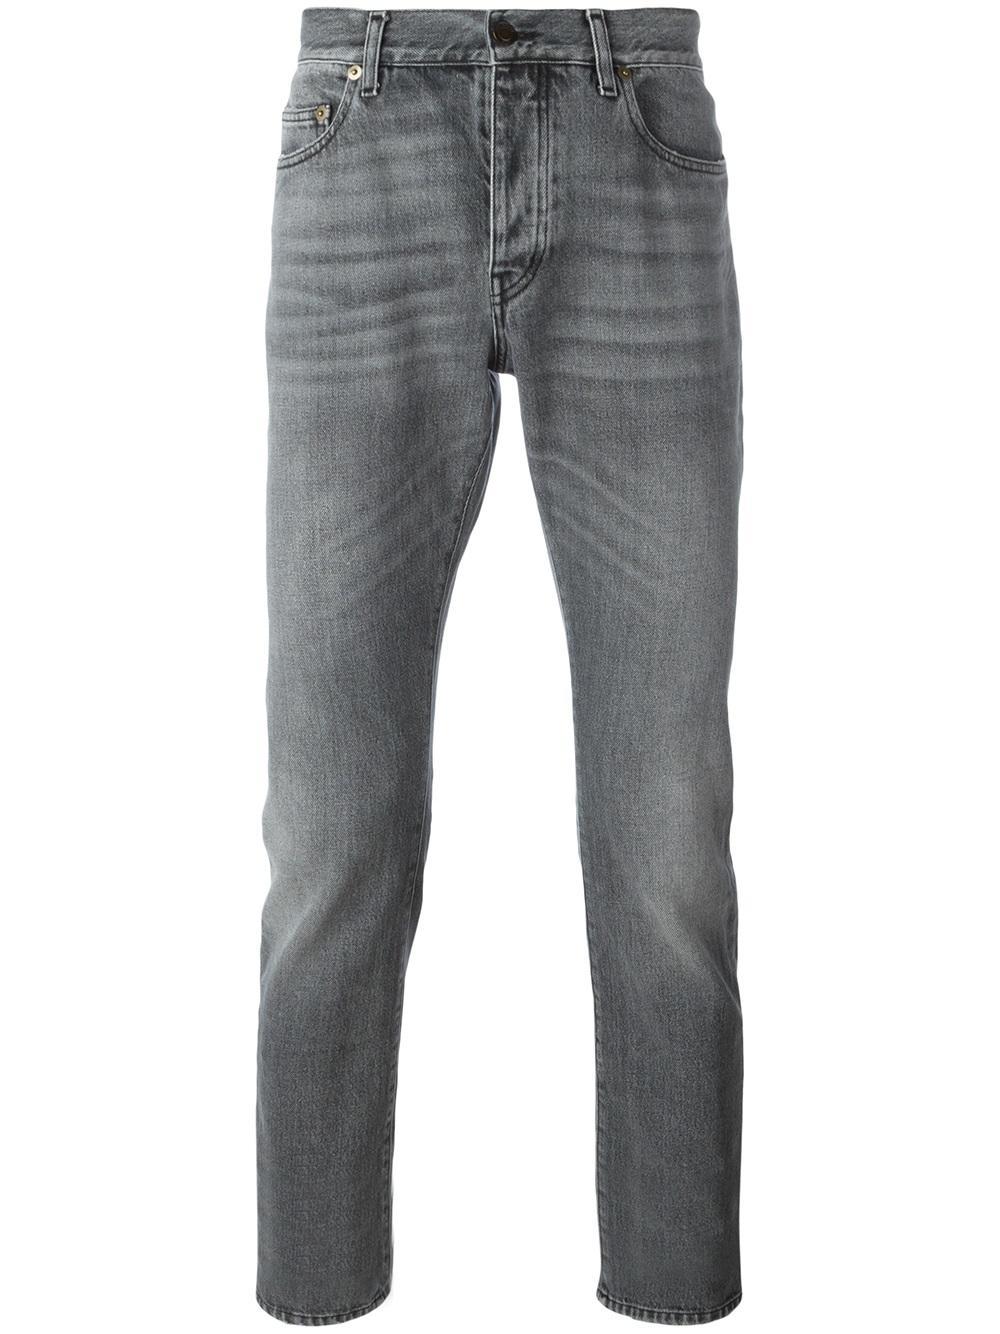 Lyst - Saint Laurent Slim Fit Jeans in Gray for Men